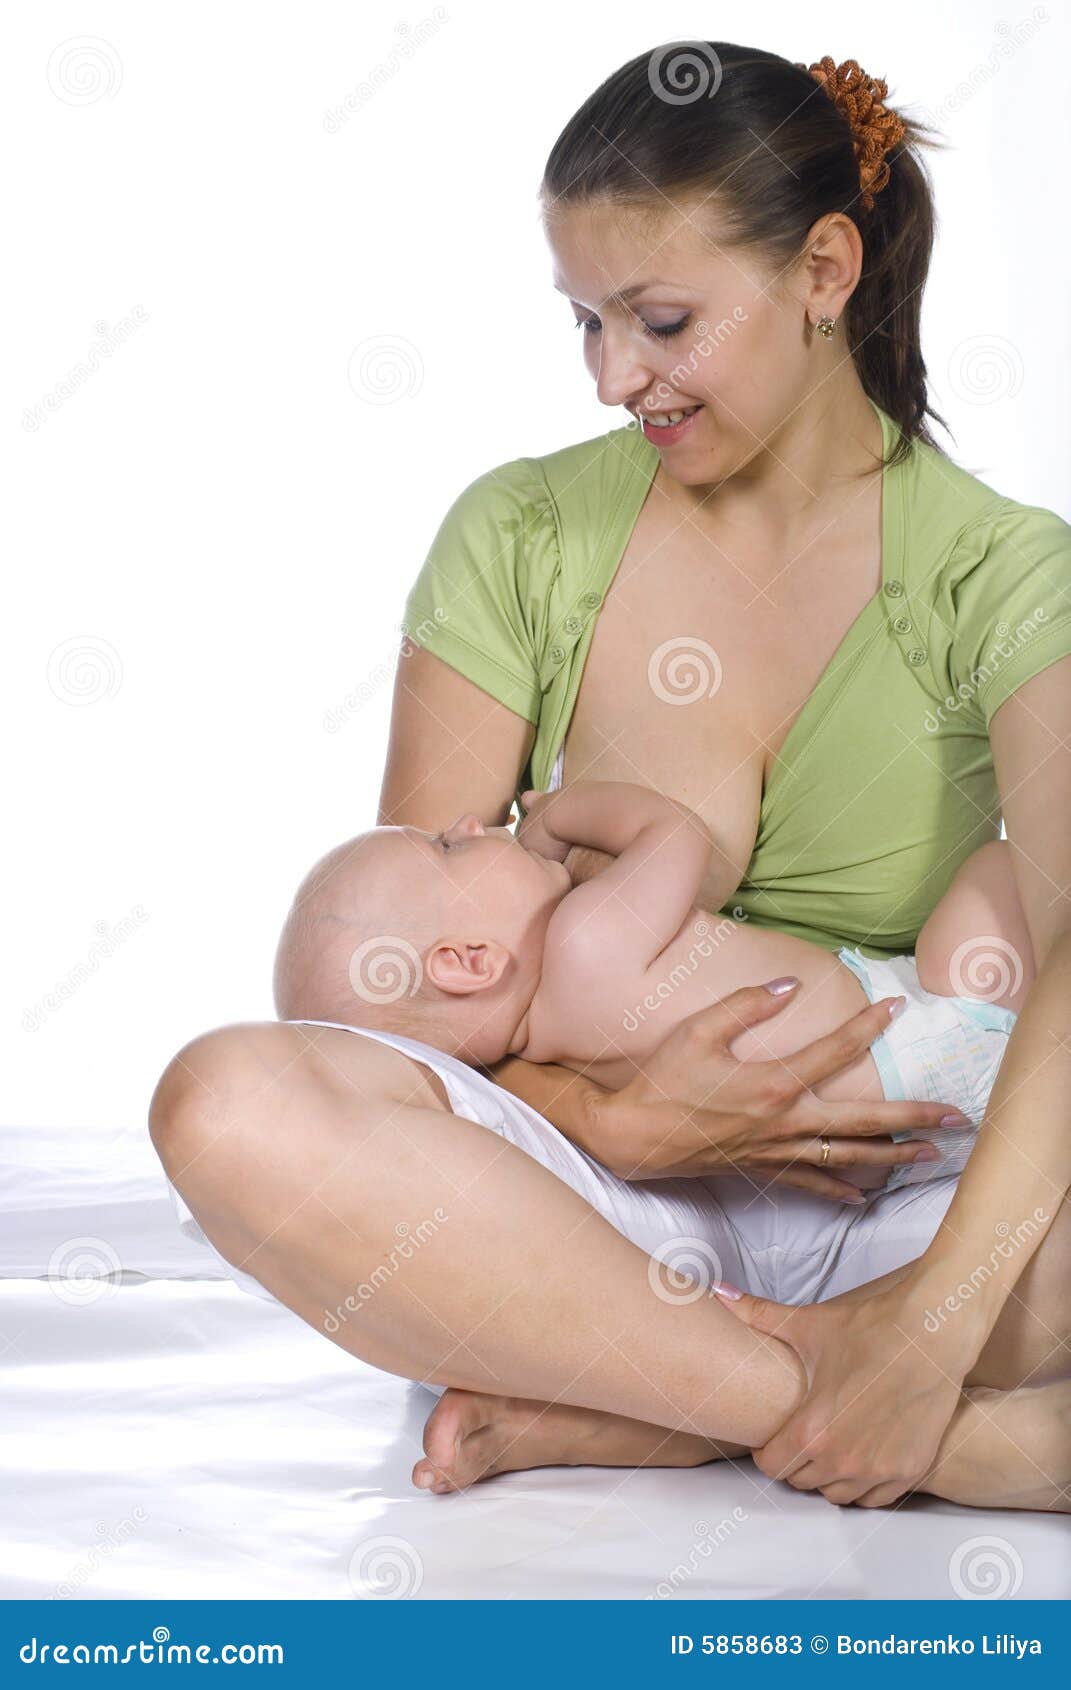 https://thumbs.dreamstime.com/z/woman-feeding-baby-5858683.jpg